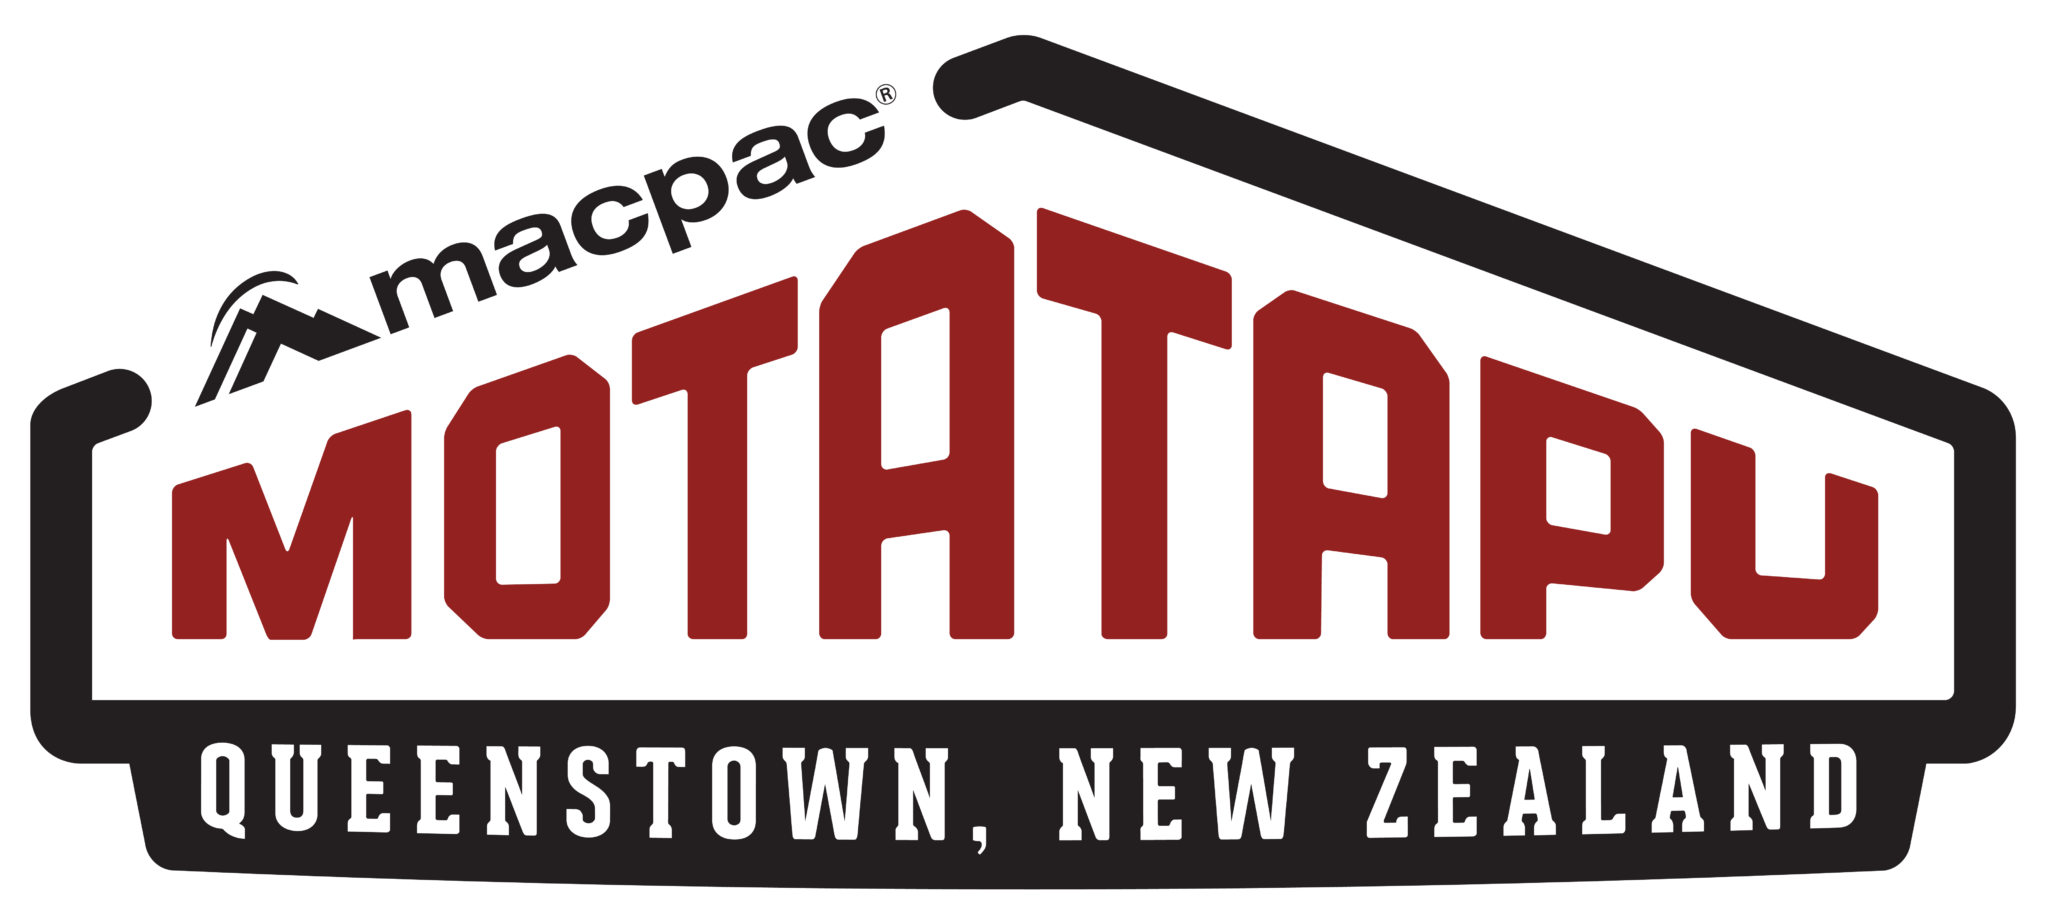 Macpac Motatapu logo on RaceRaves